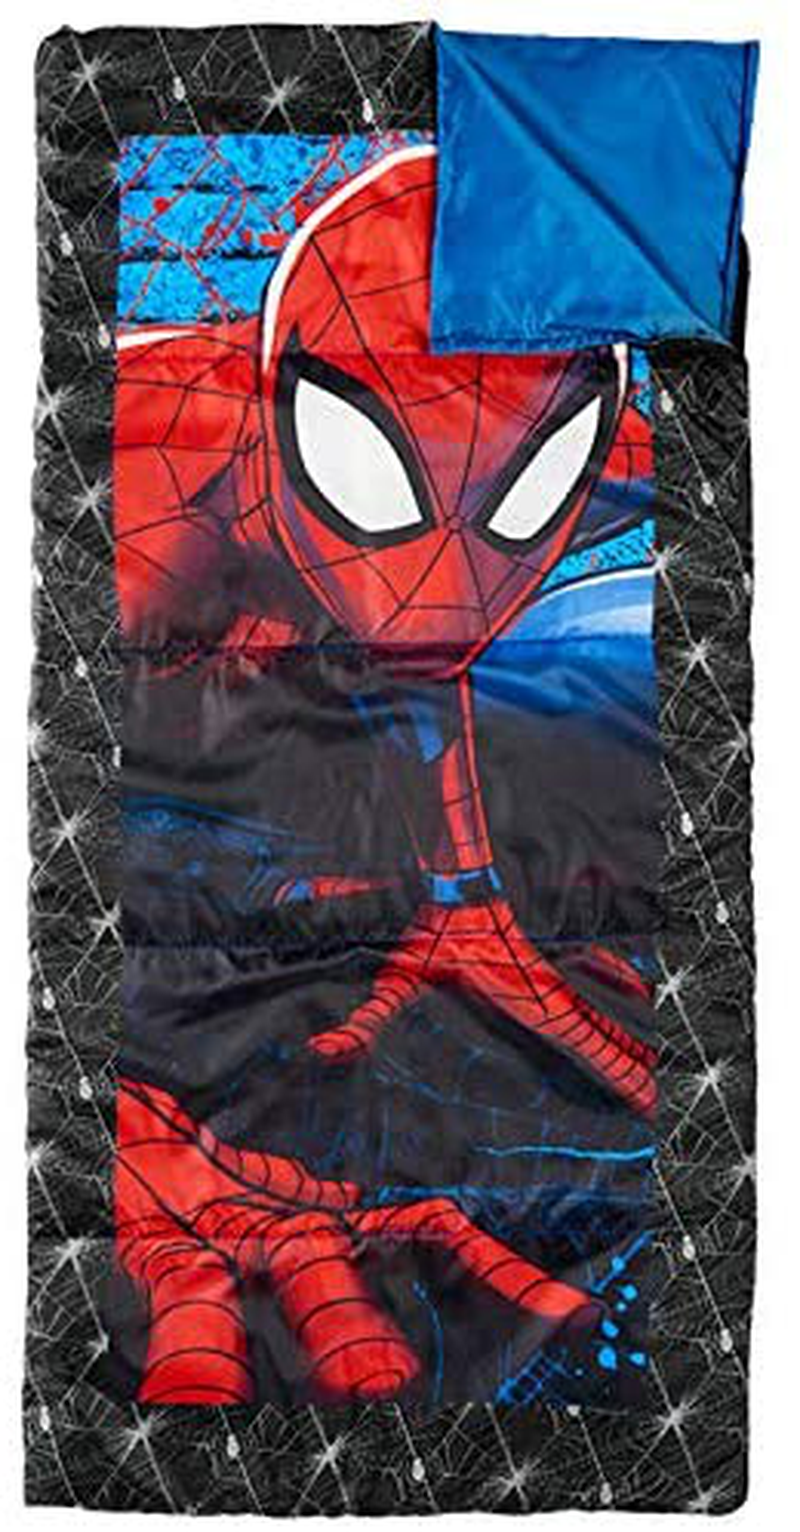 Marvel Spiderman Kids Camp Set - Tent, Backpack, Sleeping Bag and Flashlight - 4 Piece Indoor/Outdoor Spiderman Kids Set Sporting Goods > Outdoor Recreation > Camping & Hiking > Sleeping Bags Marvel   